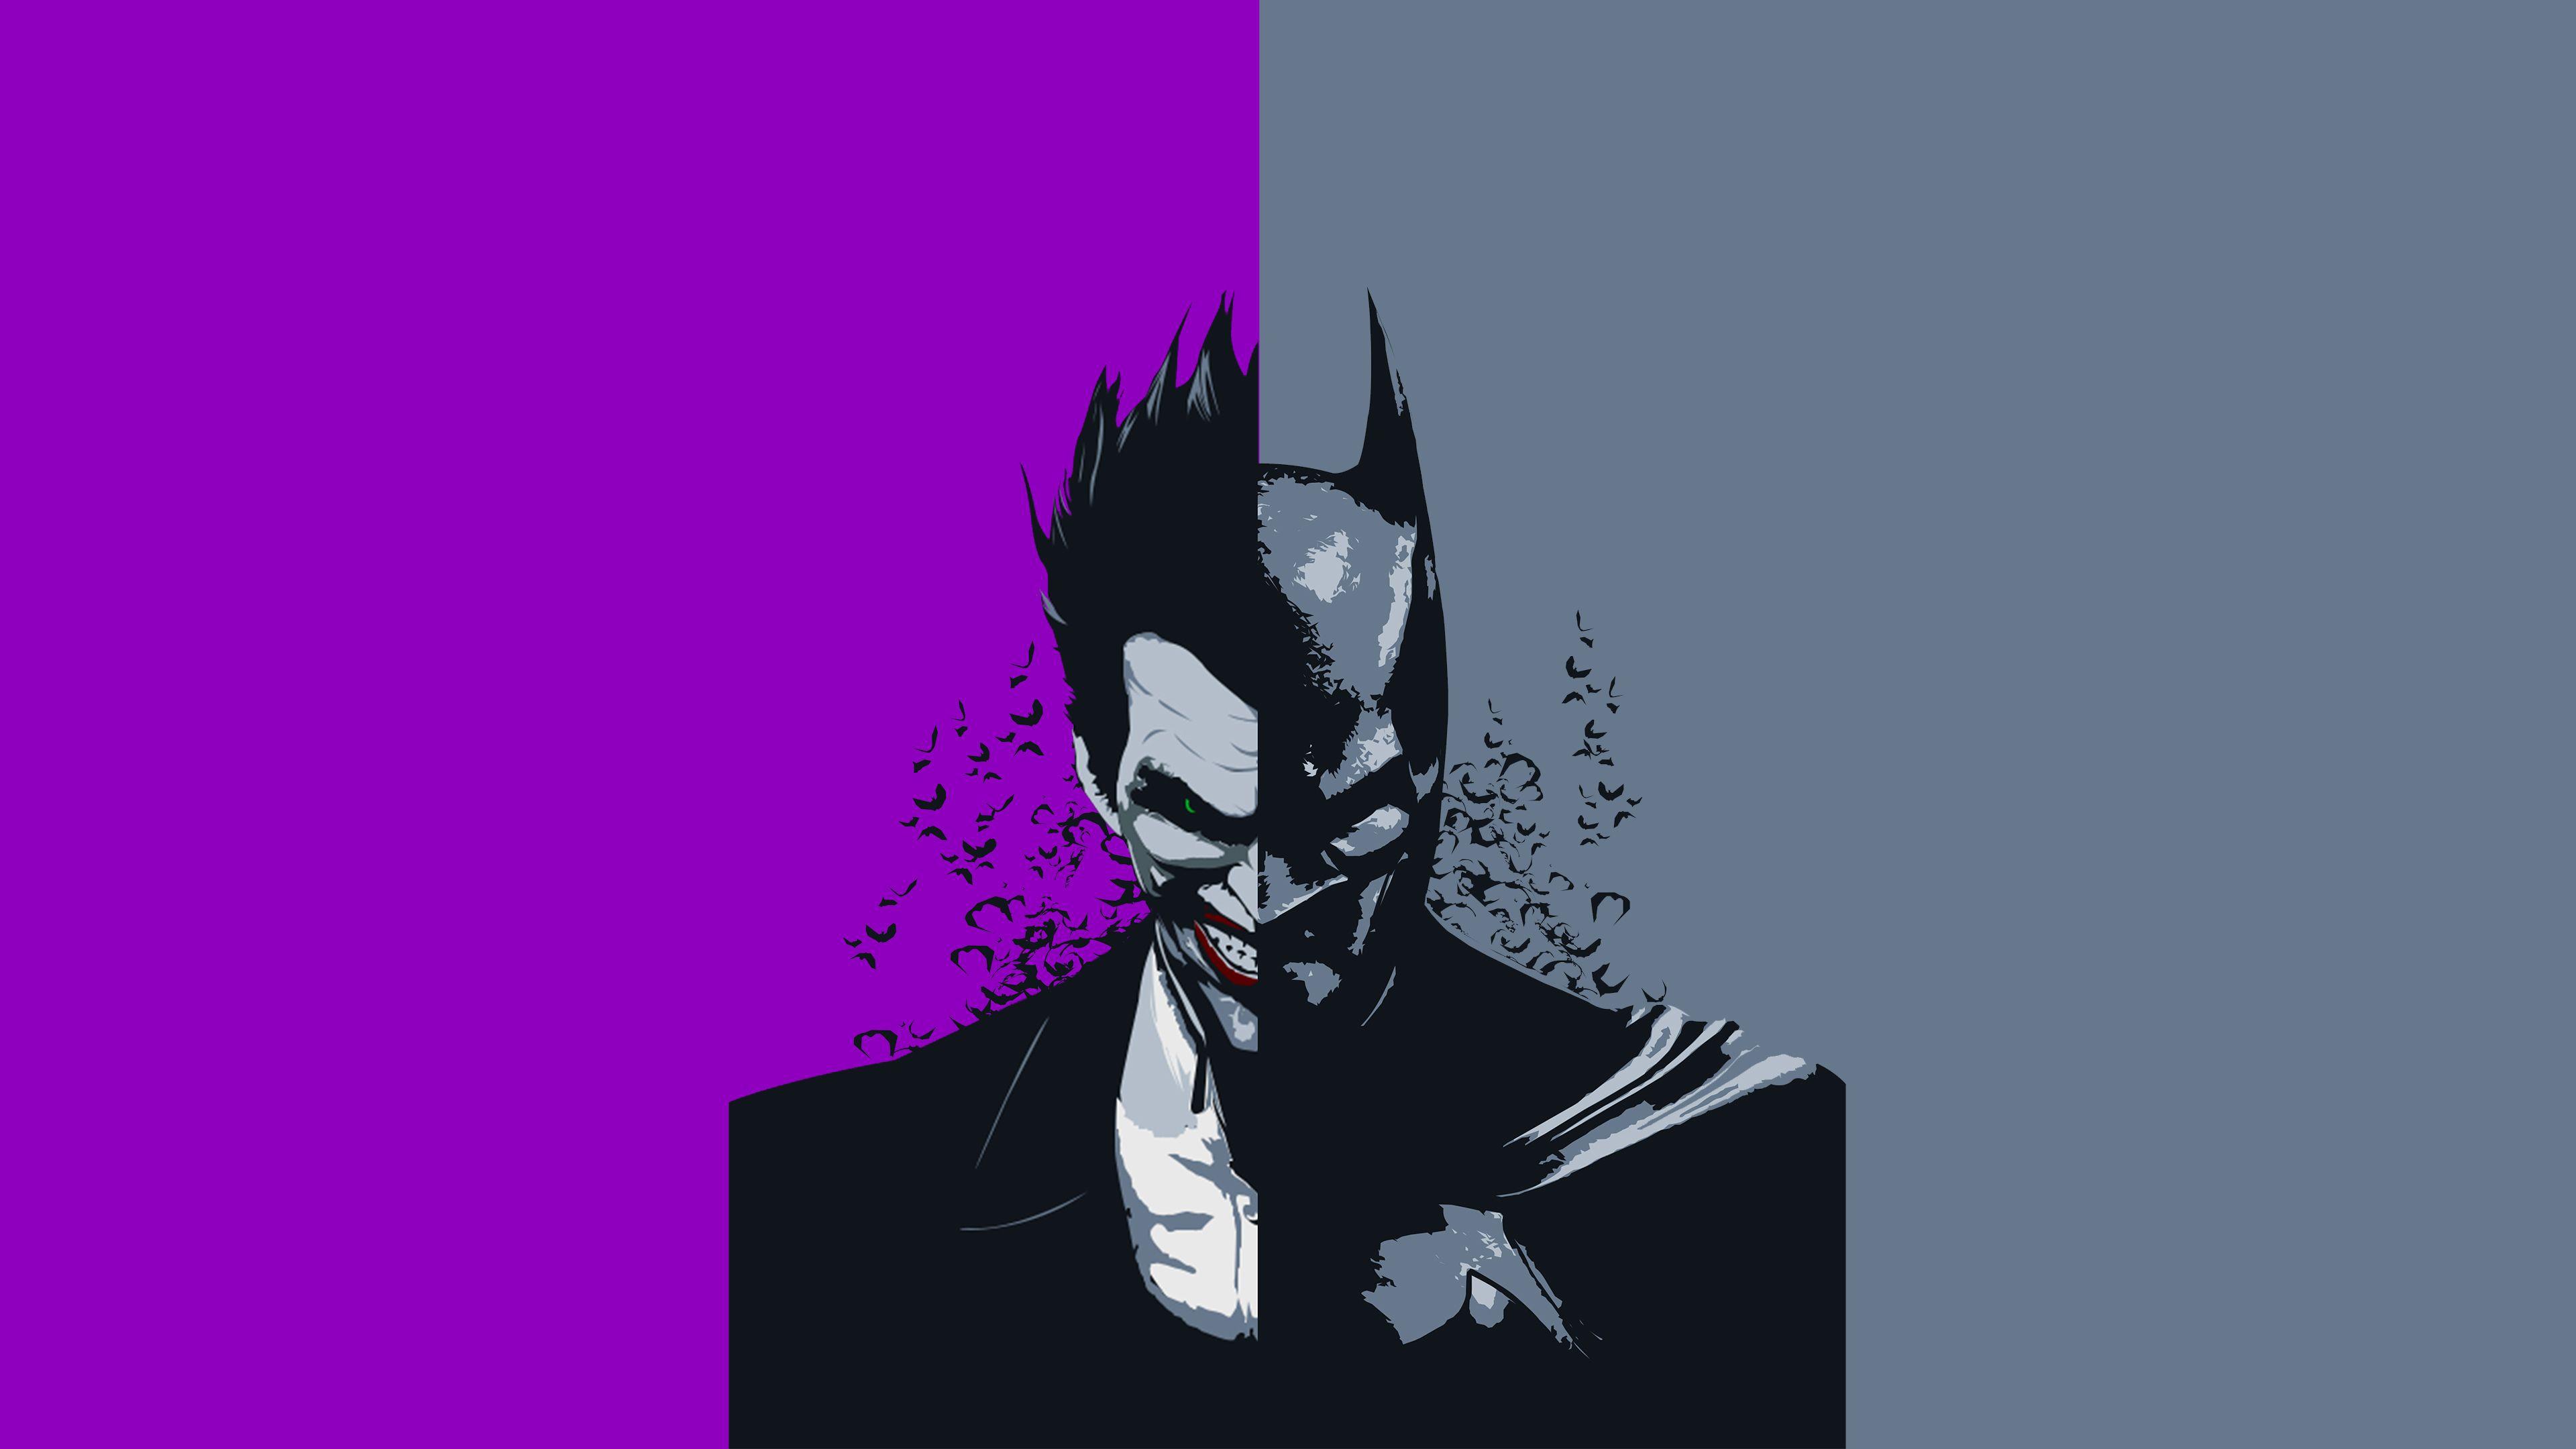 Batman Joker New Art 4k superheroes wallpaper, joker wallpaper, hd- wallpaper, dc comics wallpaper, be. Joker wallpaper, Batman wallpaper, Dc comics wallpaper